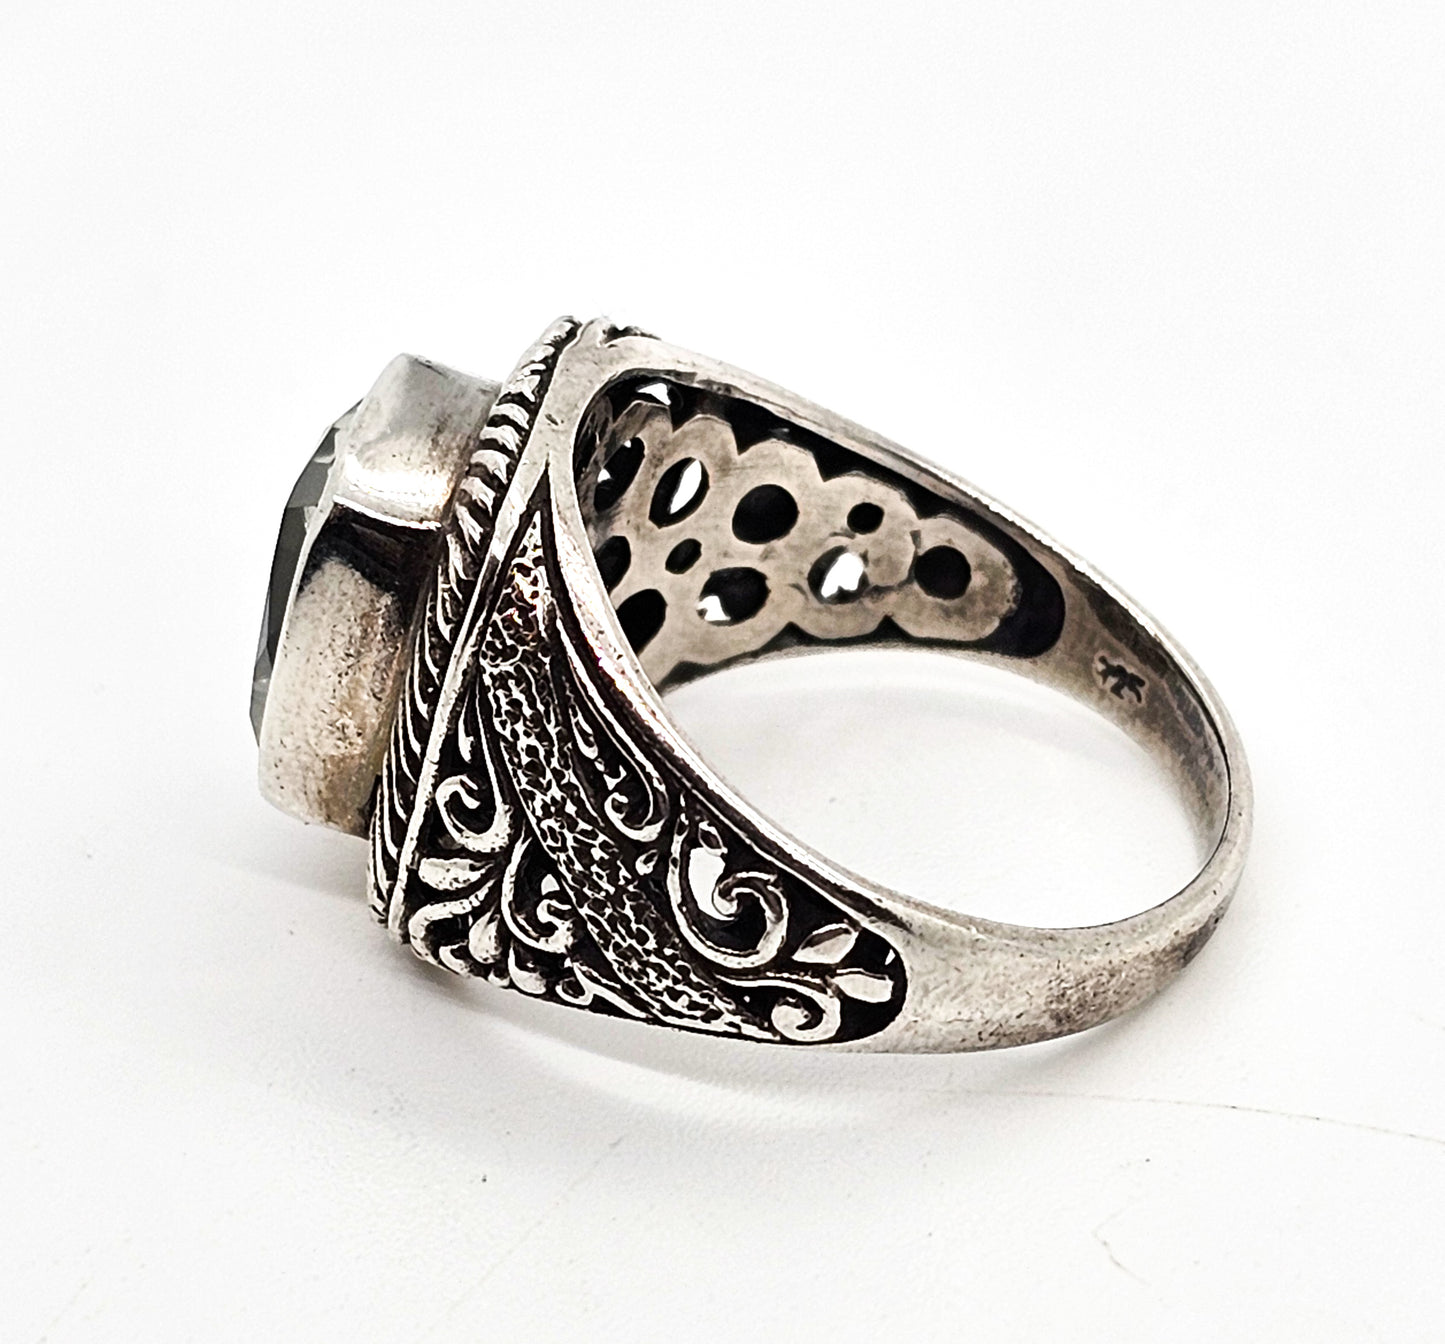 Prasiolite Green Amethyst open work tribal Bali style sterling silver ring size 8.5